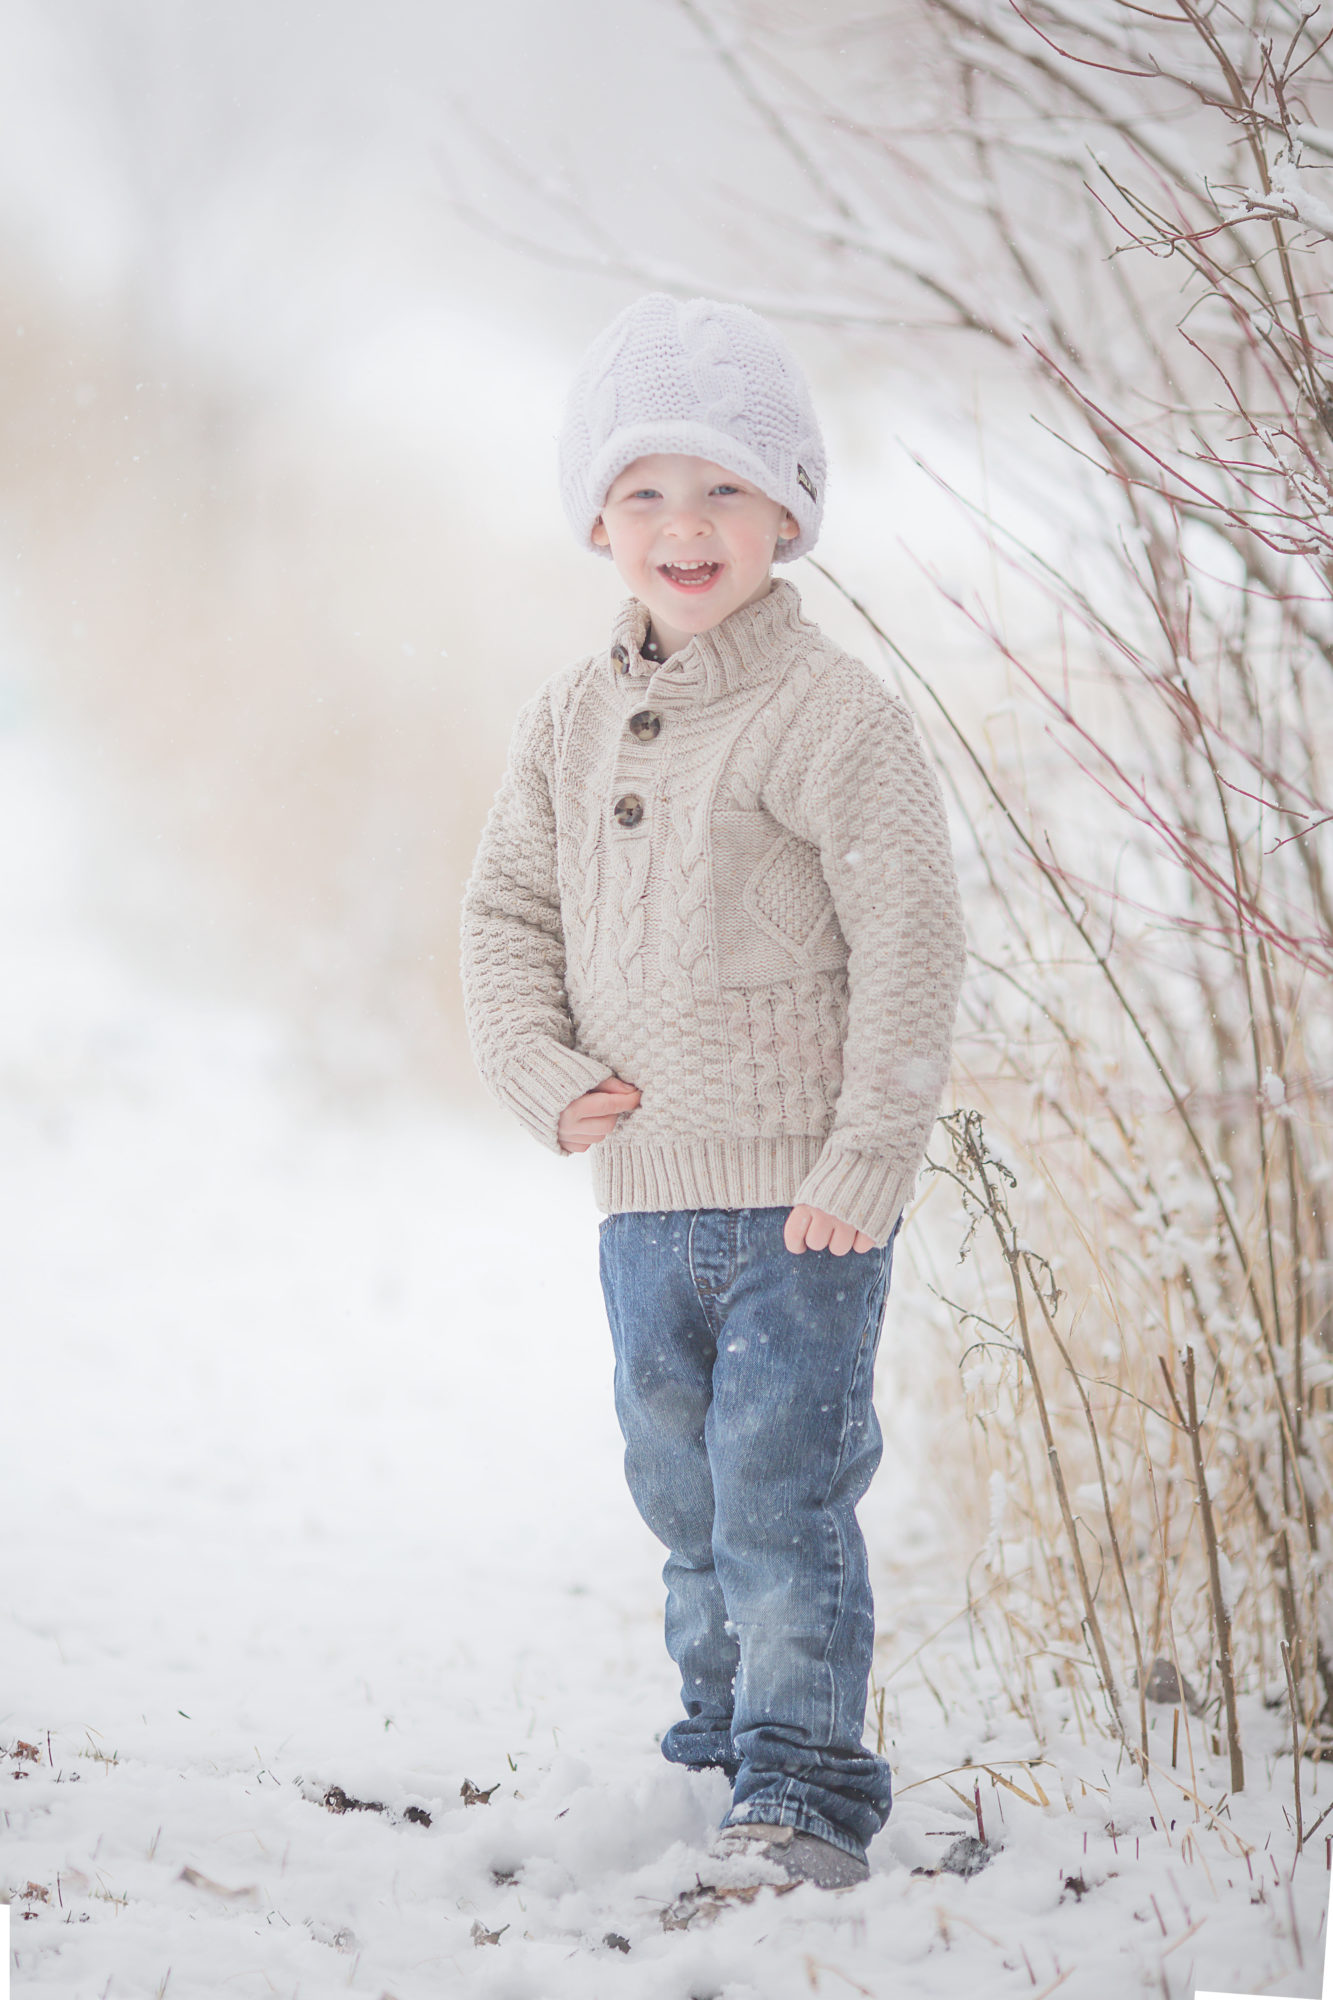 Snow in April? | Cedar Rapids Children Photographer